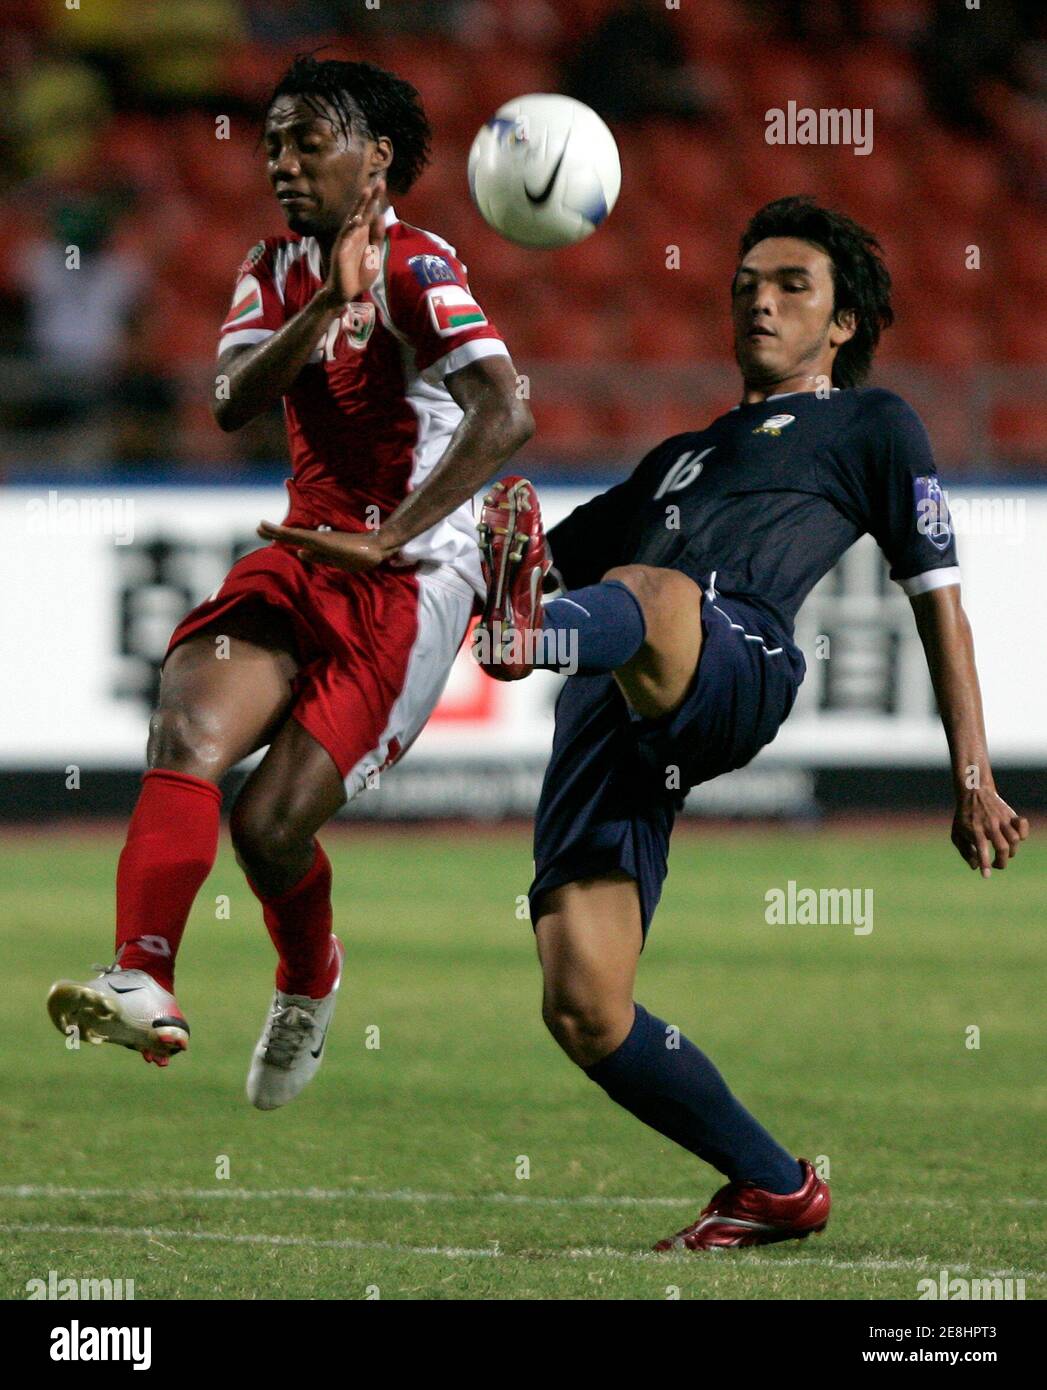 Thailand's Kiatprawut Saiwaeo (R) kicks the ball past Oman's Ahmed Hadid during their AFC Asian Cup Group A match at Rajamangala Stadium in Bangkok July 12, 2007. Thailand defeated Oman 2-0.  REUTERS/Chaiwat Subprasom  (THAILAND) Stock Photo